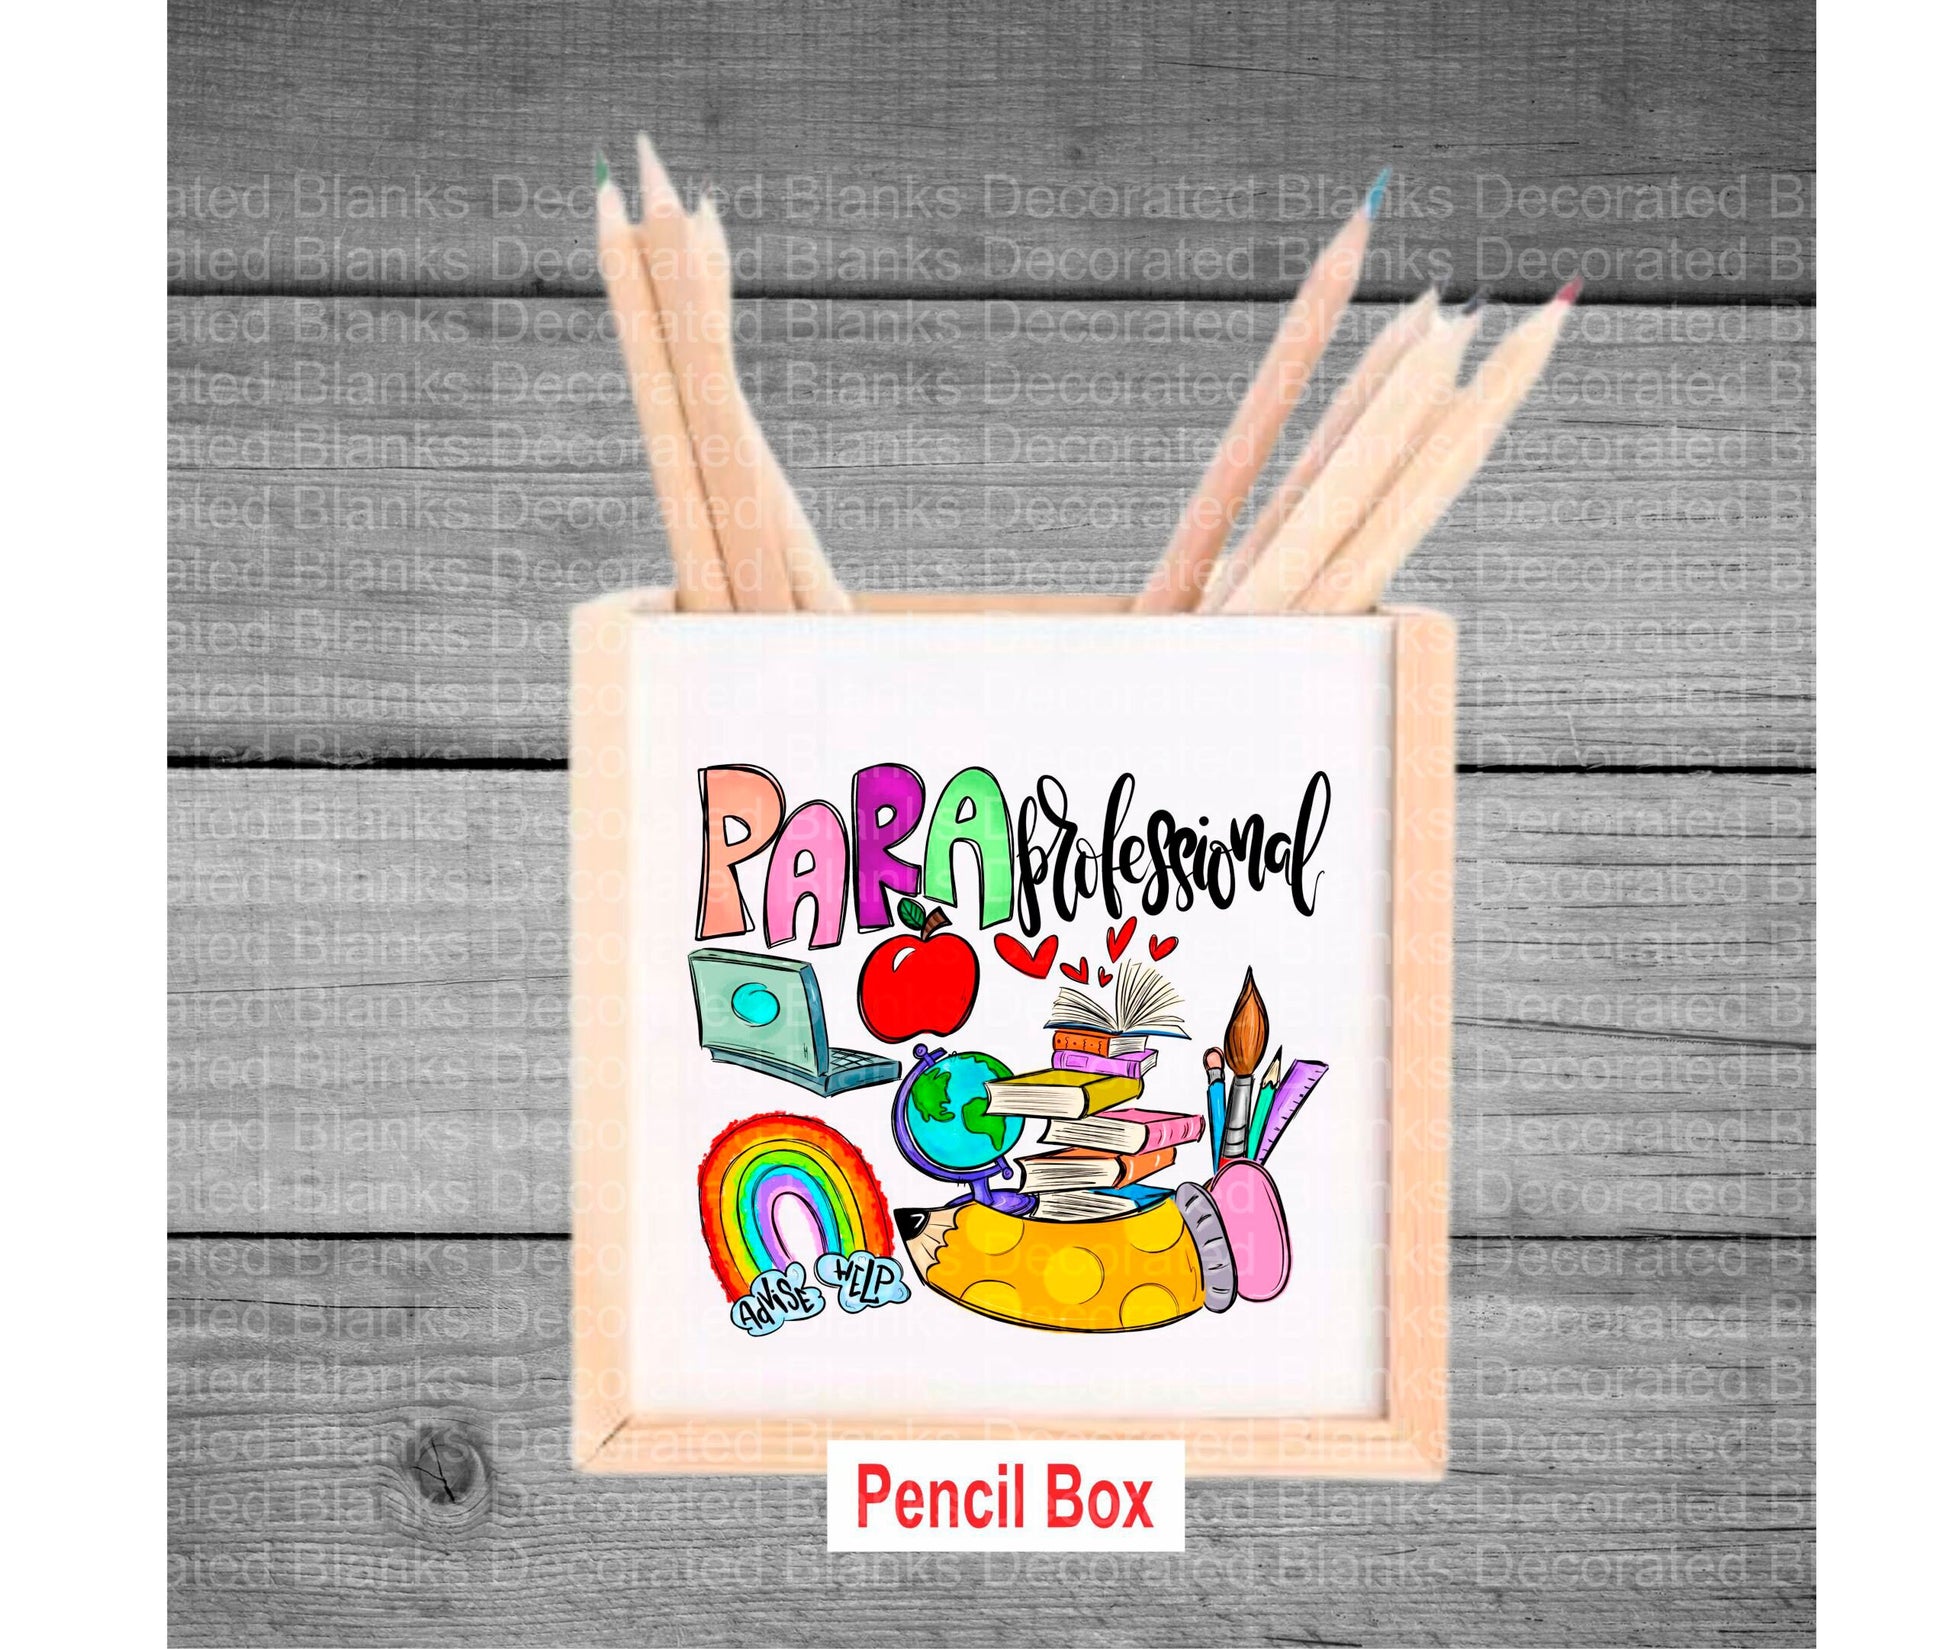 Para Pencil Box/ Paraprofessional Pencil Box/ Para Gift/ Interchangeable Pencil Box/ Wood Pencil Box/ Desk Gift/ Gift for Paraprofessional